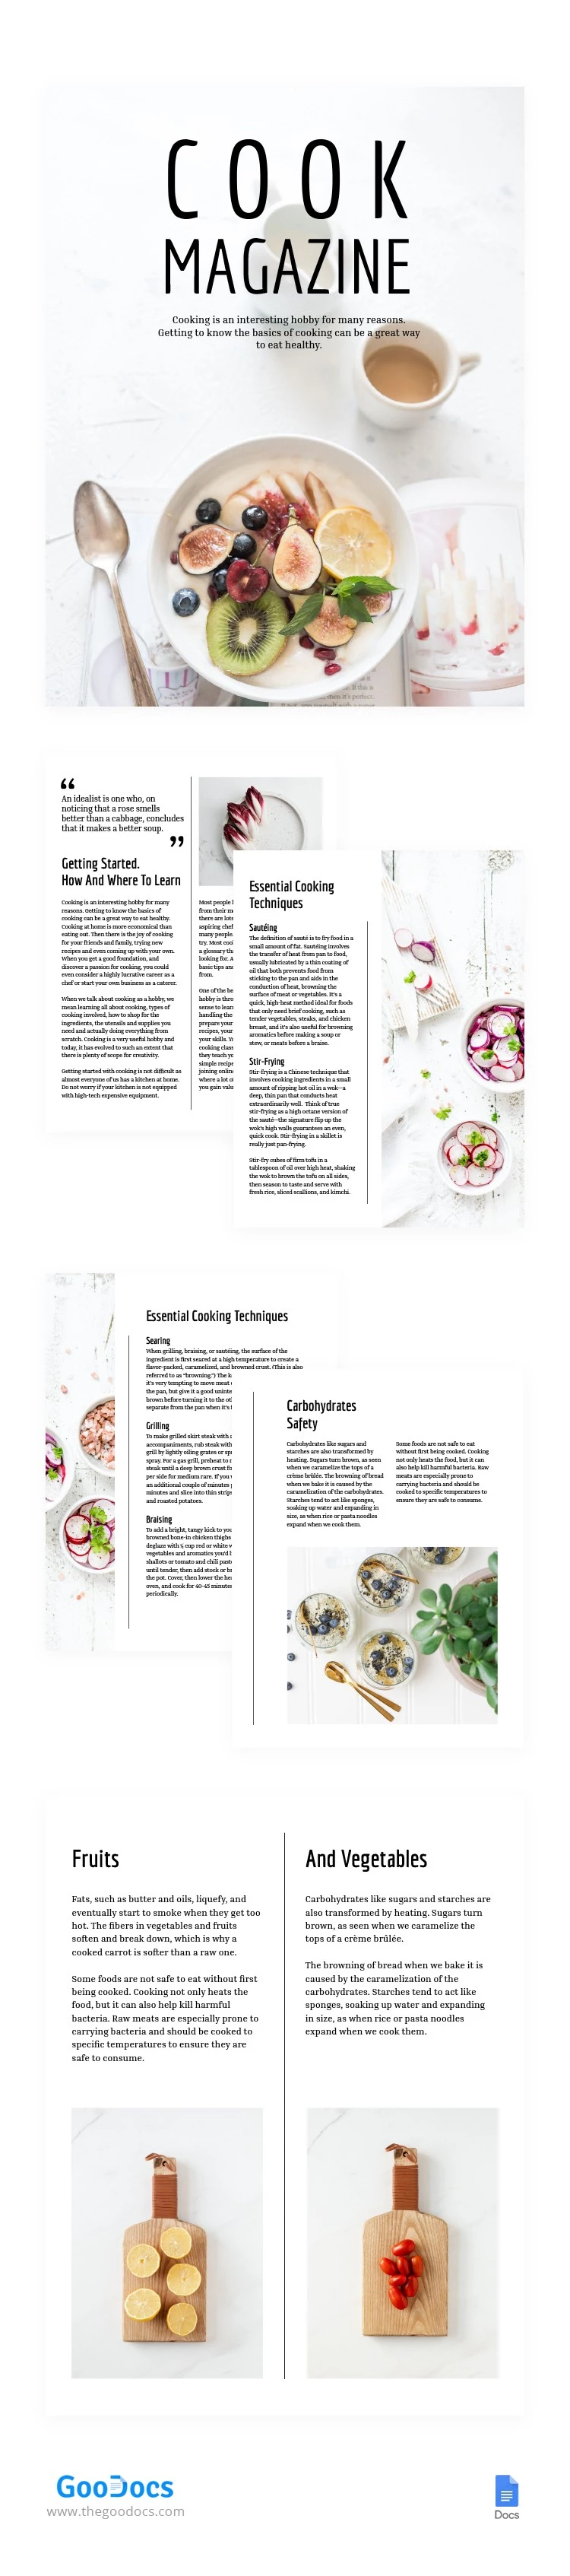 Minimalistic White Cook Magazine - free Google Docs Template - 10064414